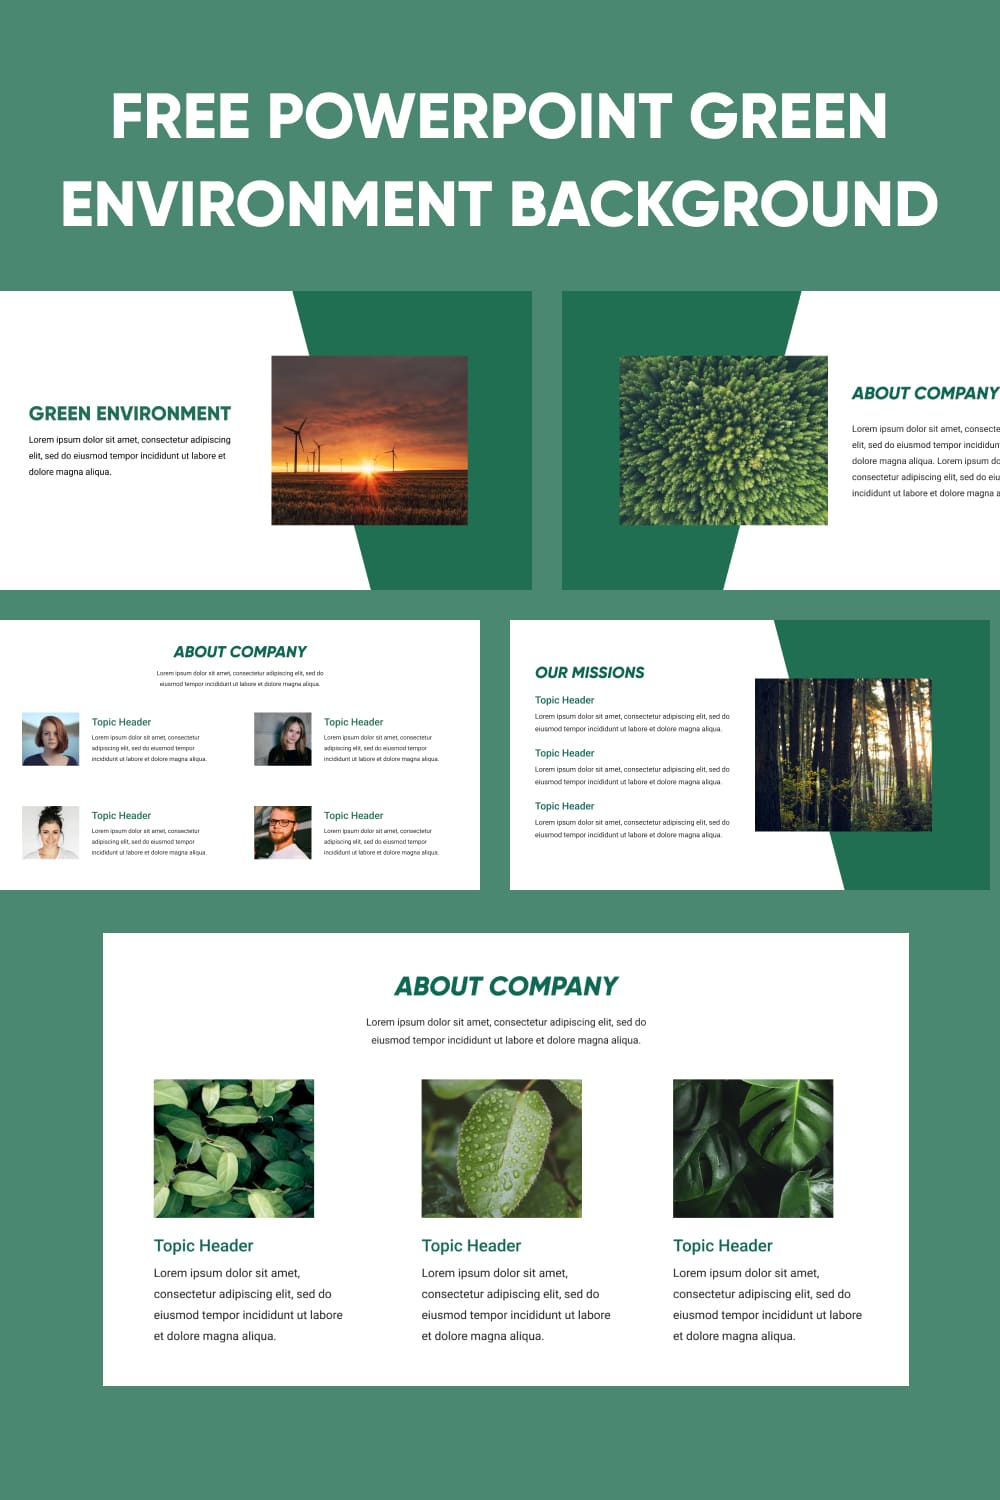 Free Powerpoint Green Environment Background Pinterest.